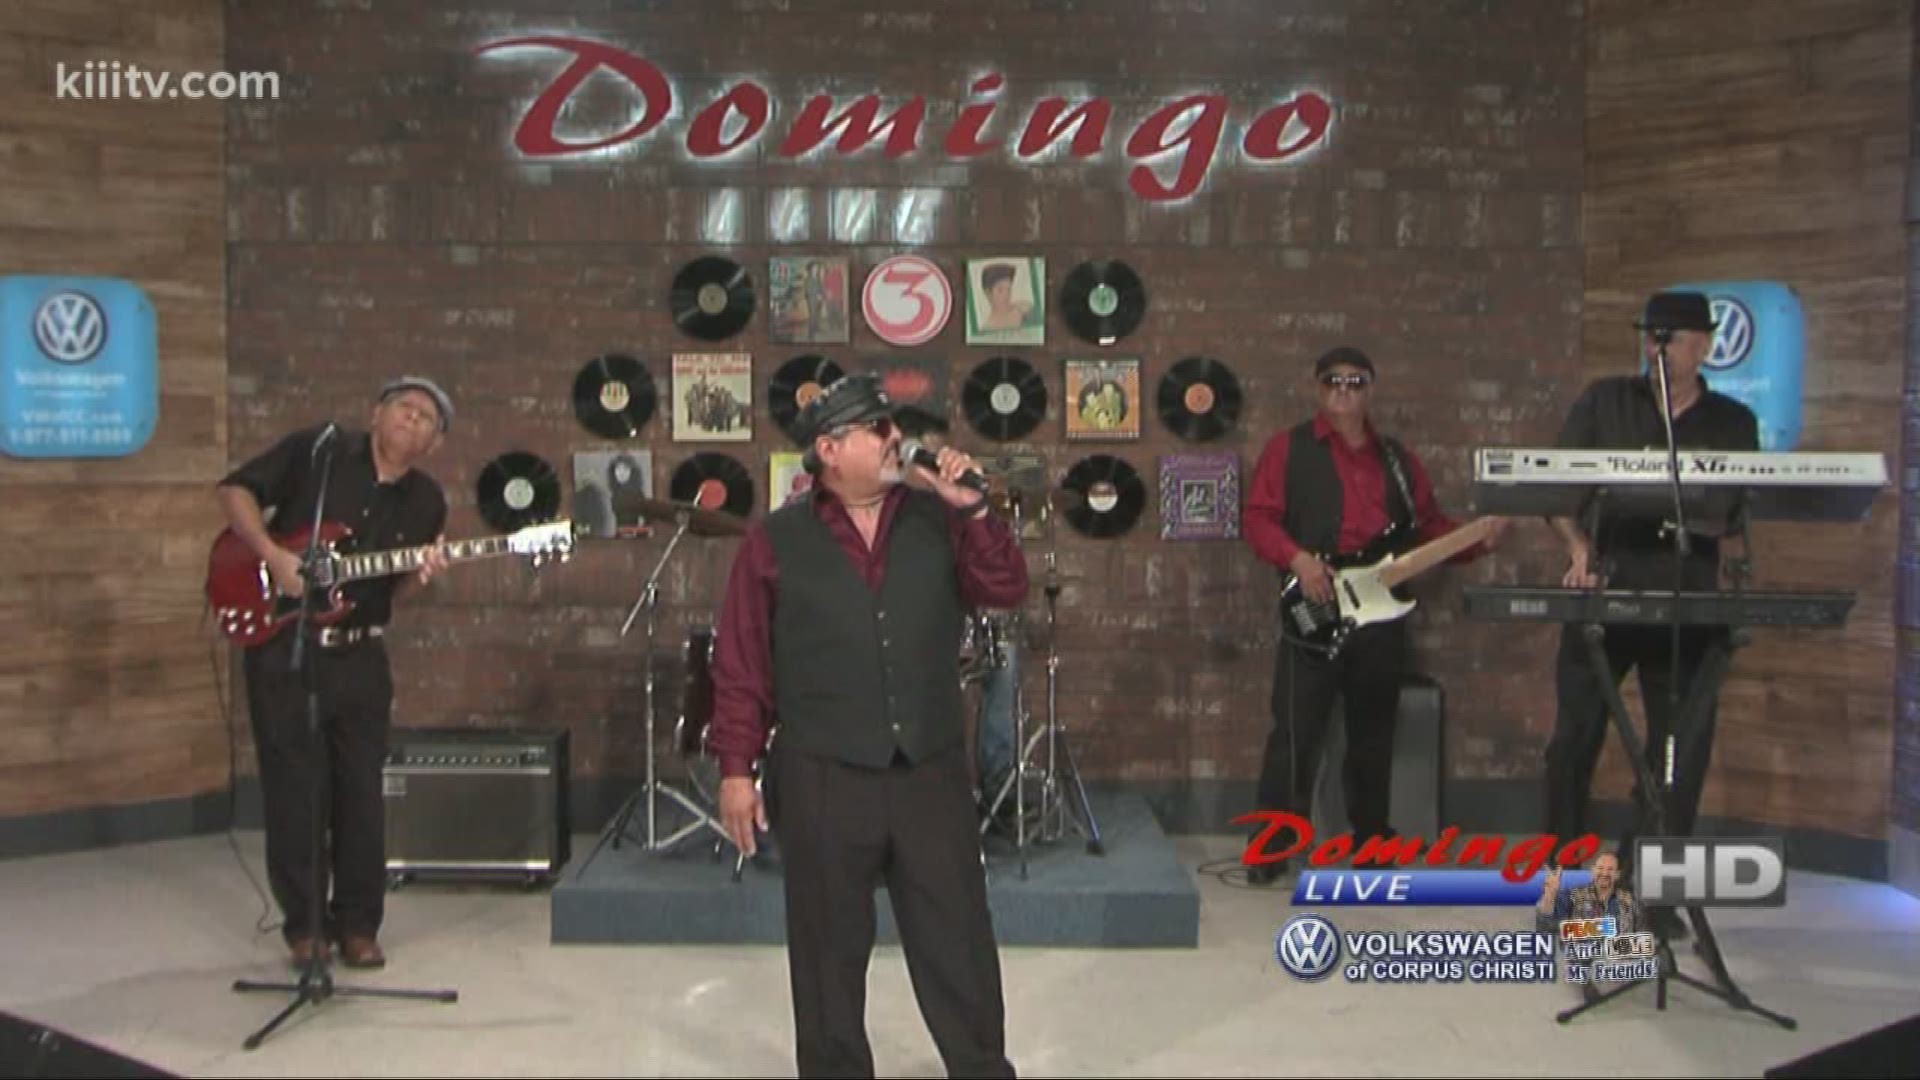 Grupo Bezzo performing "Eres Mia" on Domingo Live.